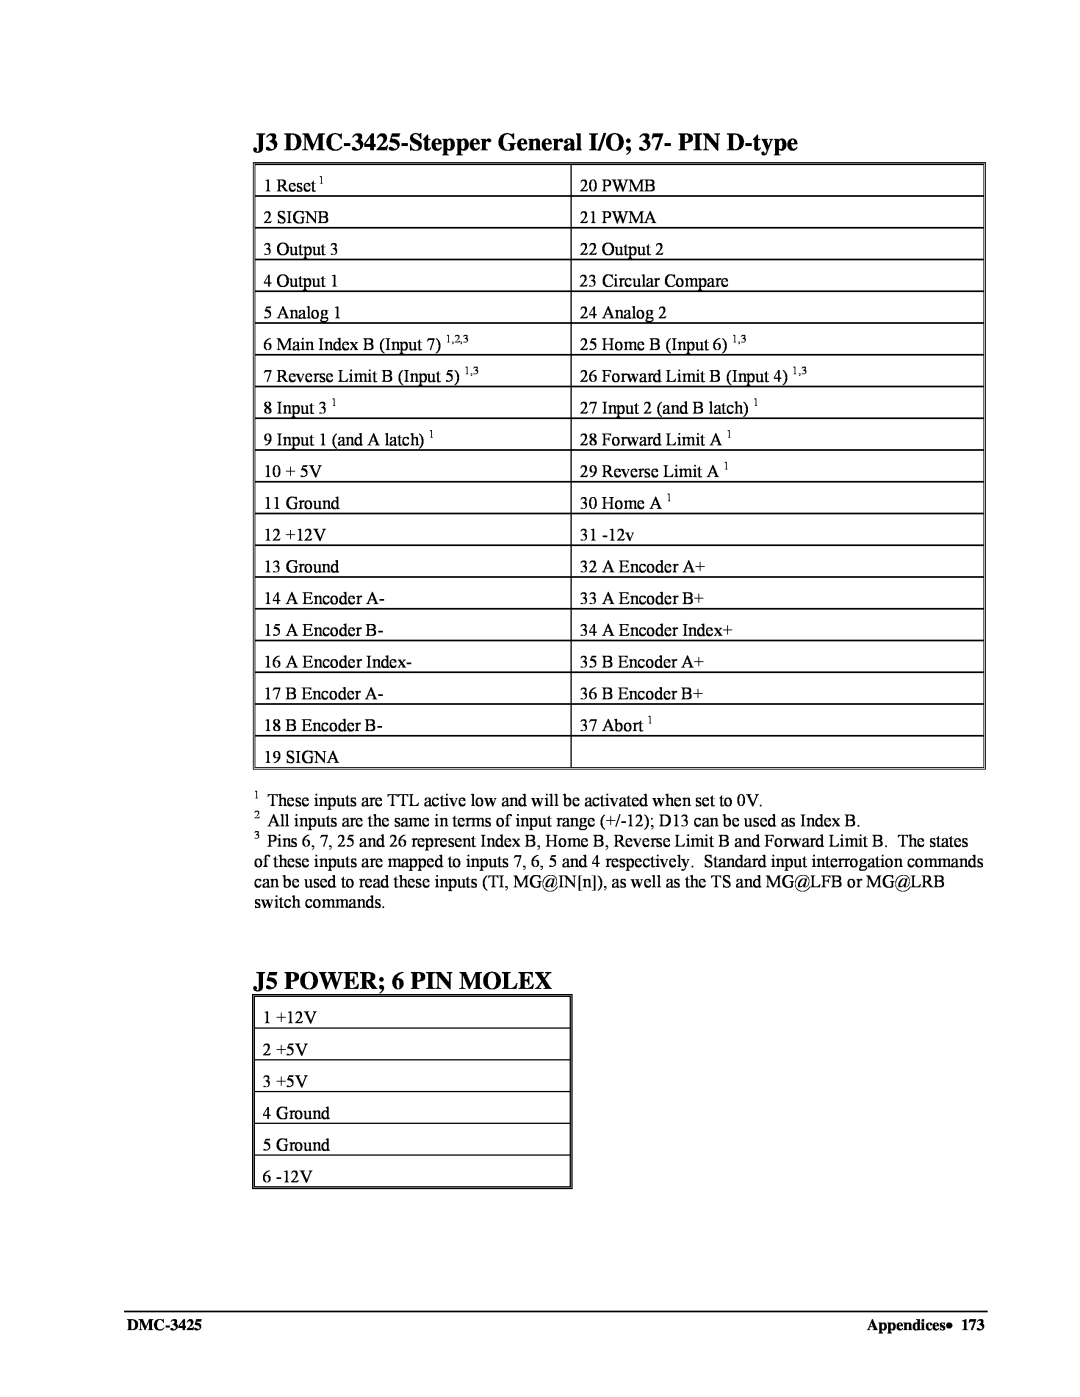 Galil user manual J3 DMC-3425-StepperGeneral I/O; 37- PIN D-type, J5 POWER; 6 PIN MOLEX 